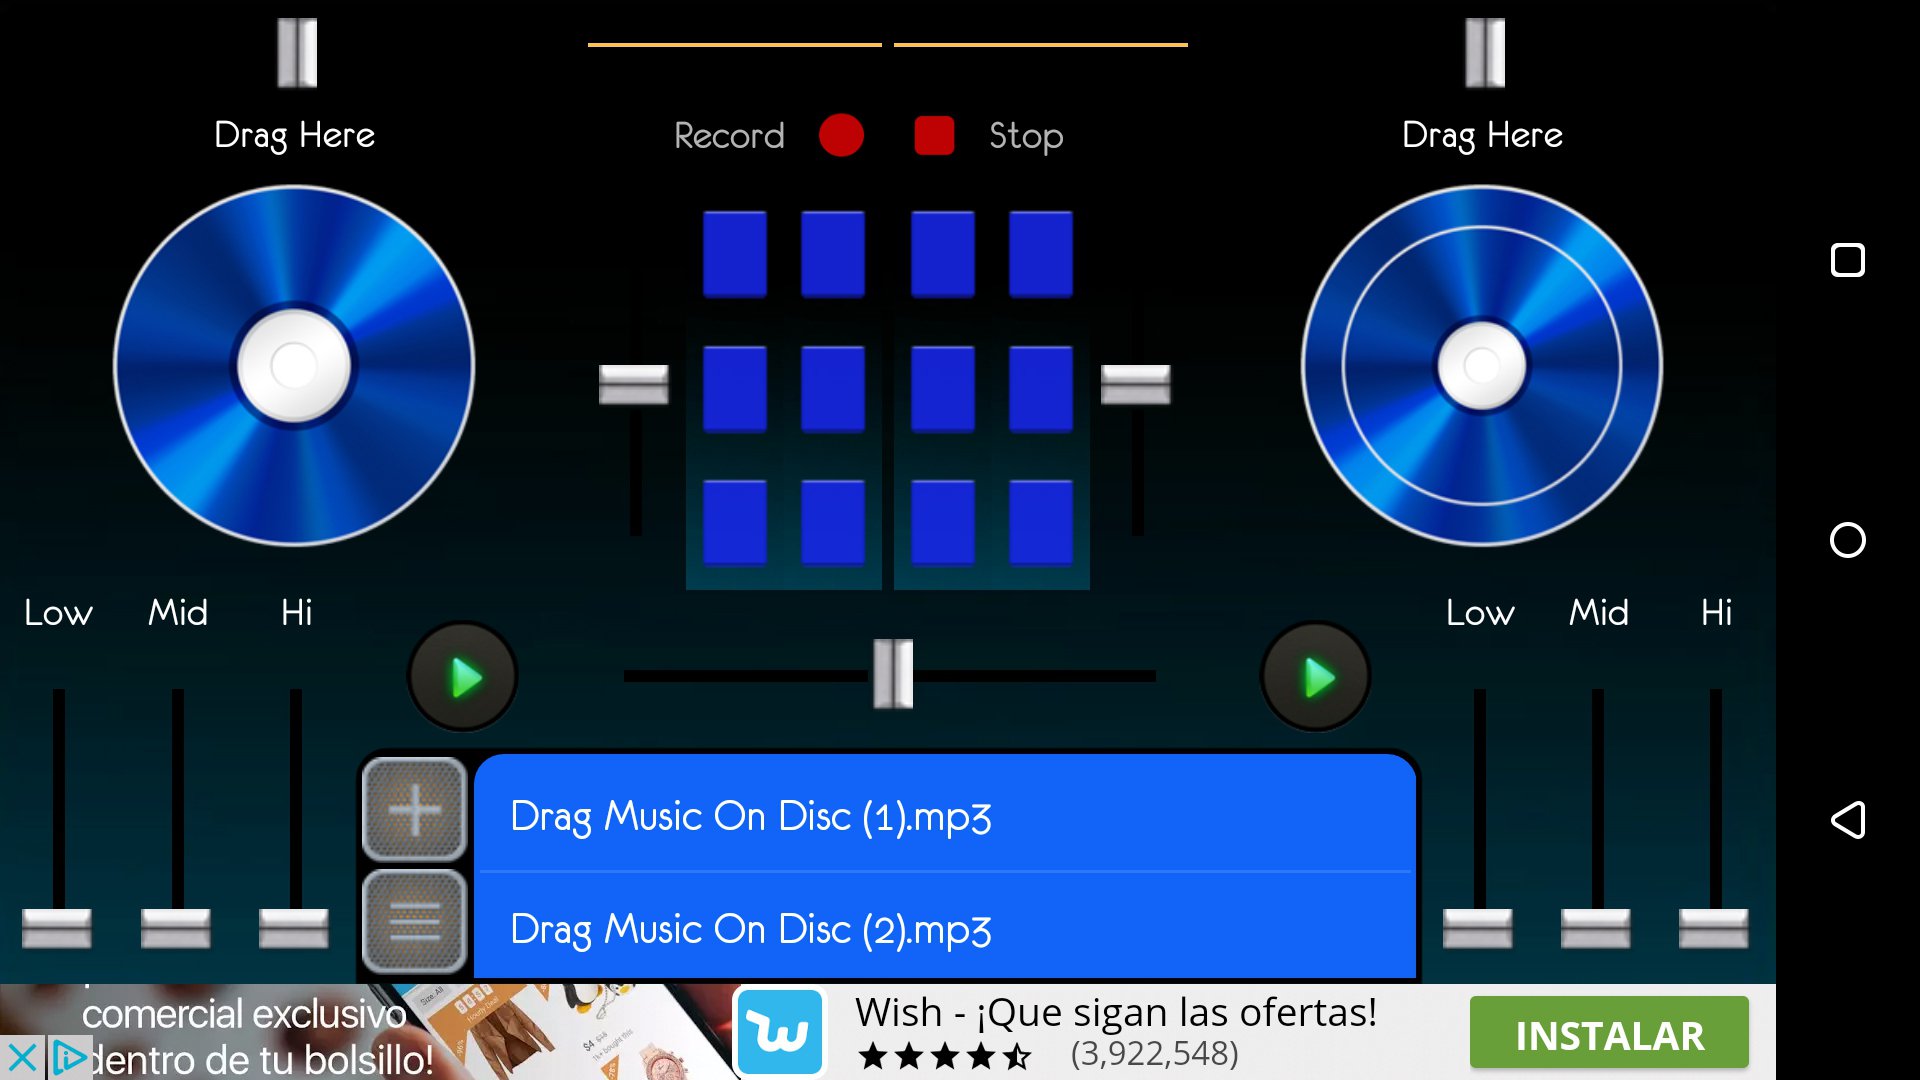 Virtual Dj Mixer Pro Image 2 Thumbnail - Virtual Dj For Android , HD Wallpaper & Backgrounds